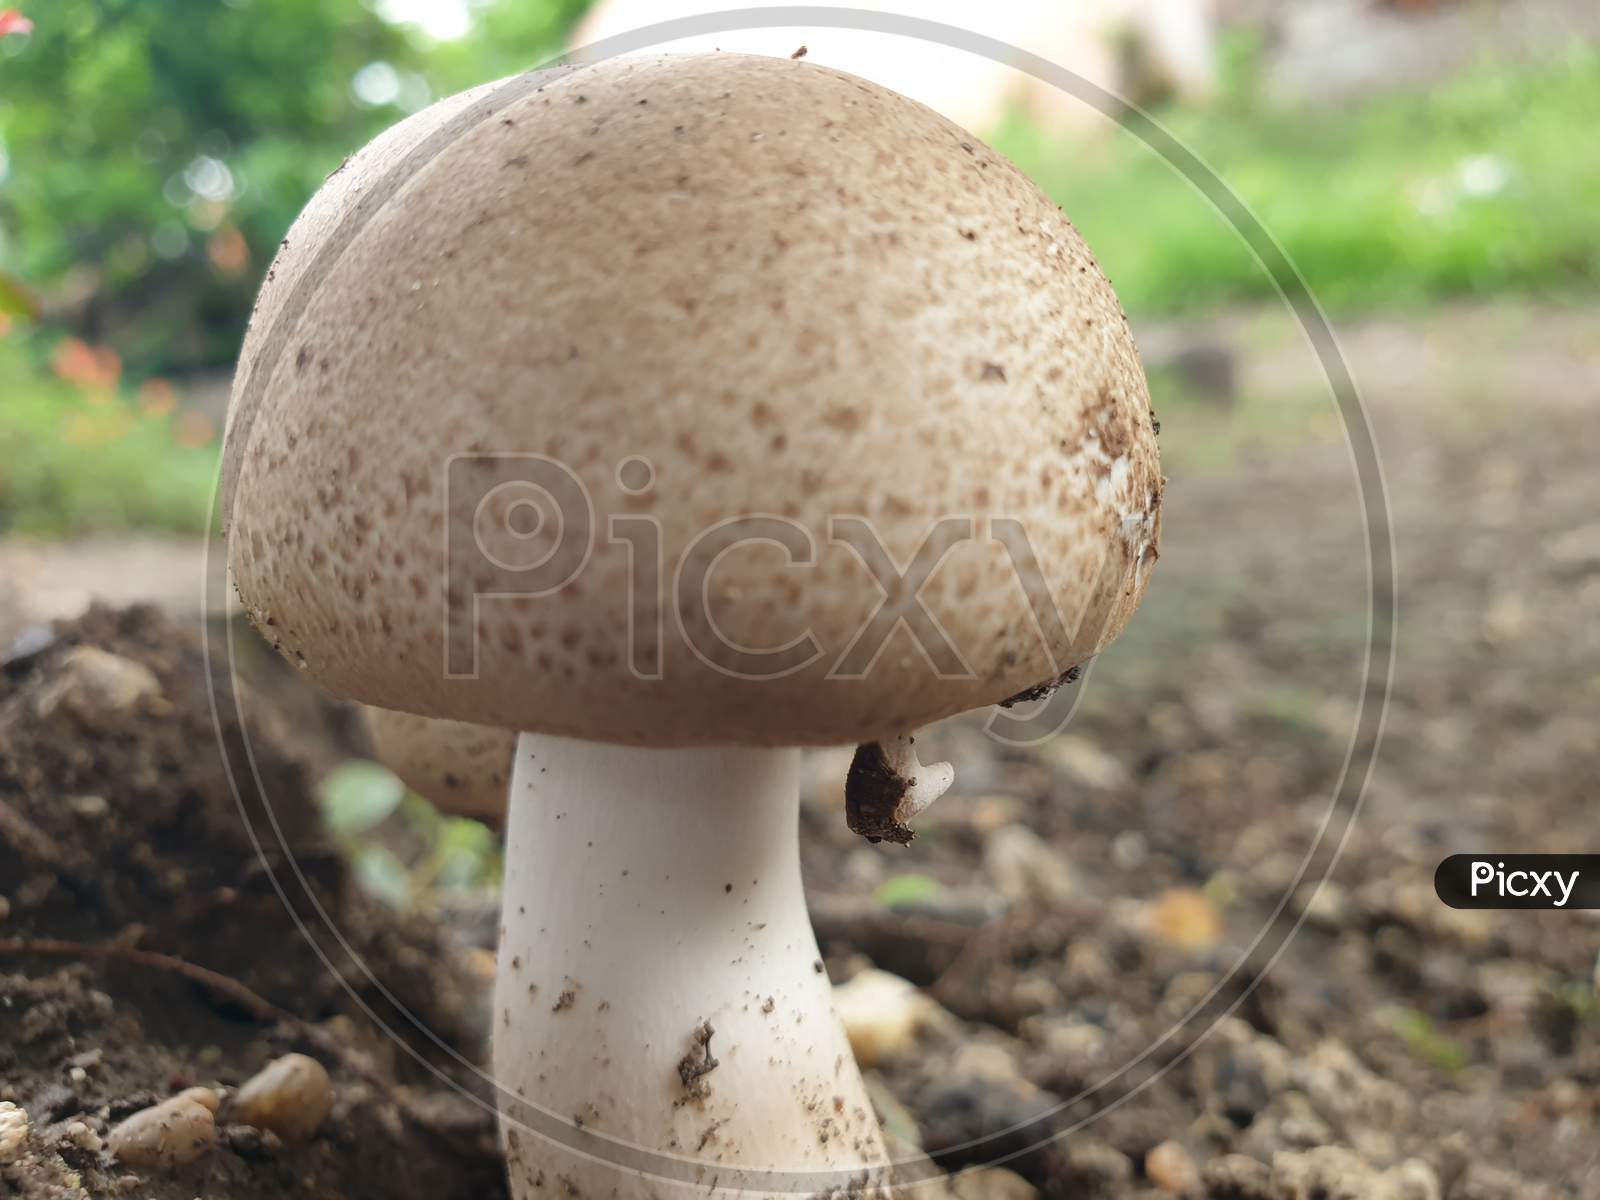 This is a mushroom